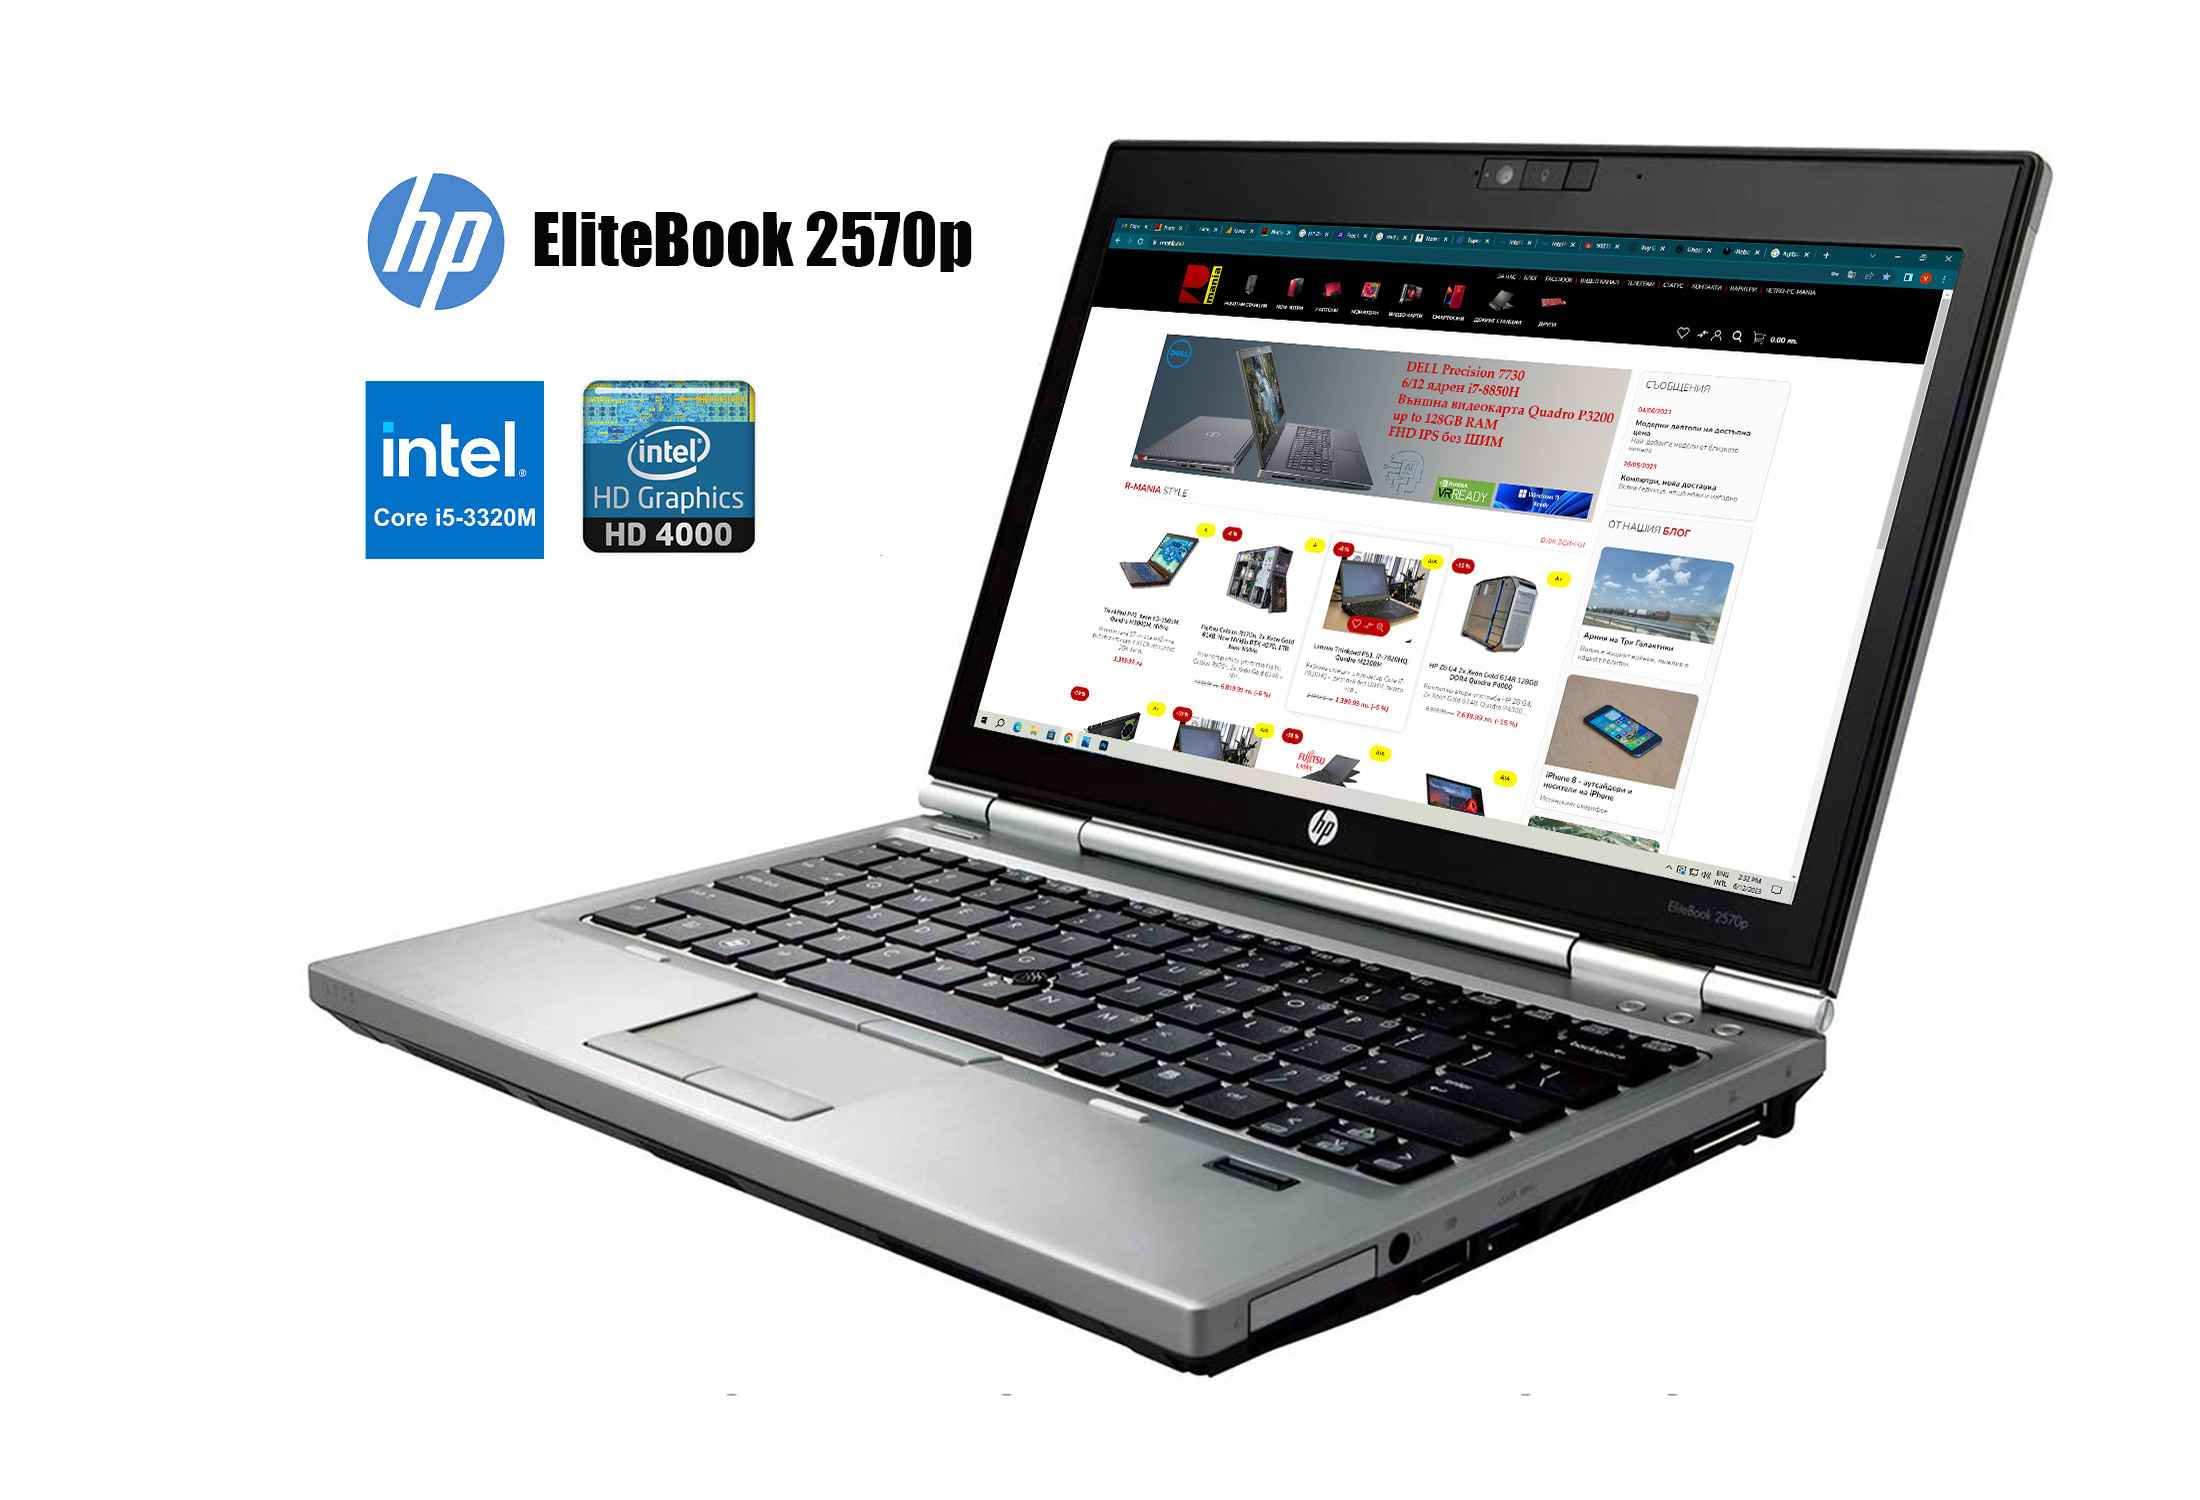 HP EliteBook 2570p, Core i5-3320M, 4K Encoder-edNyq.jpeg